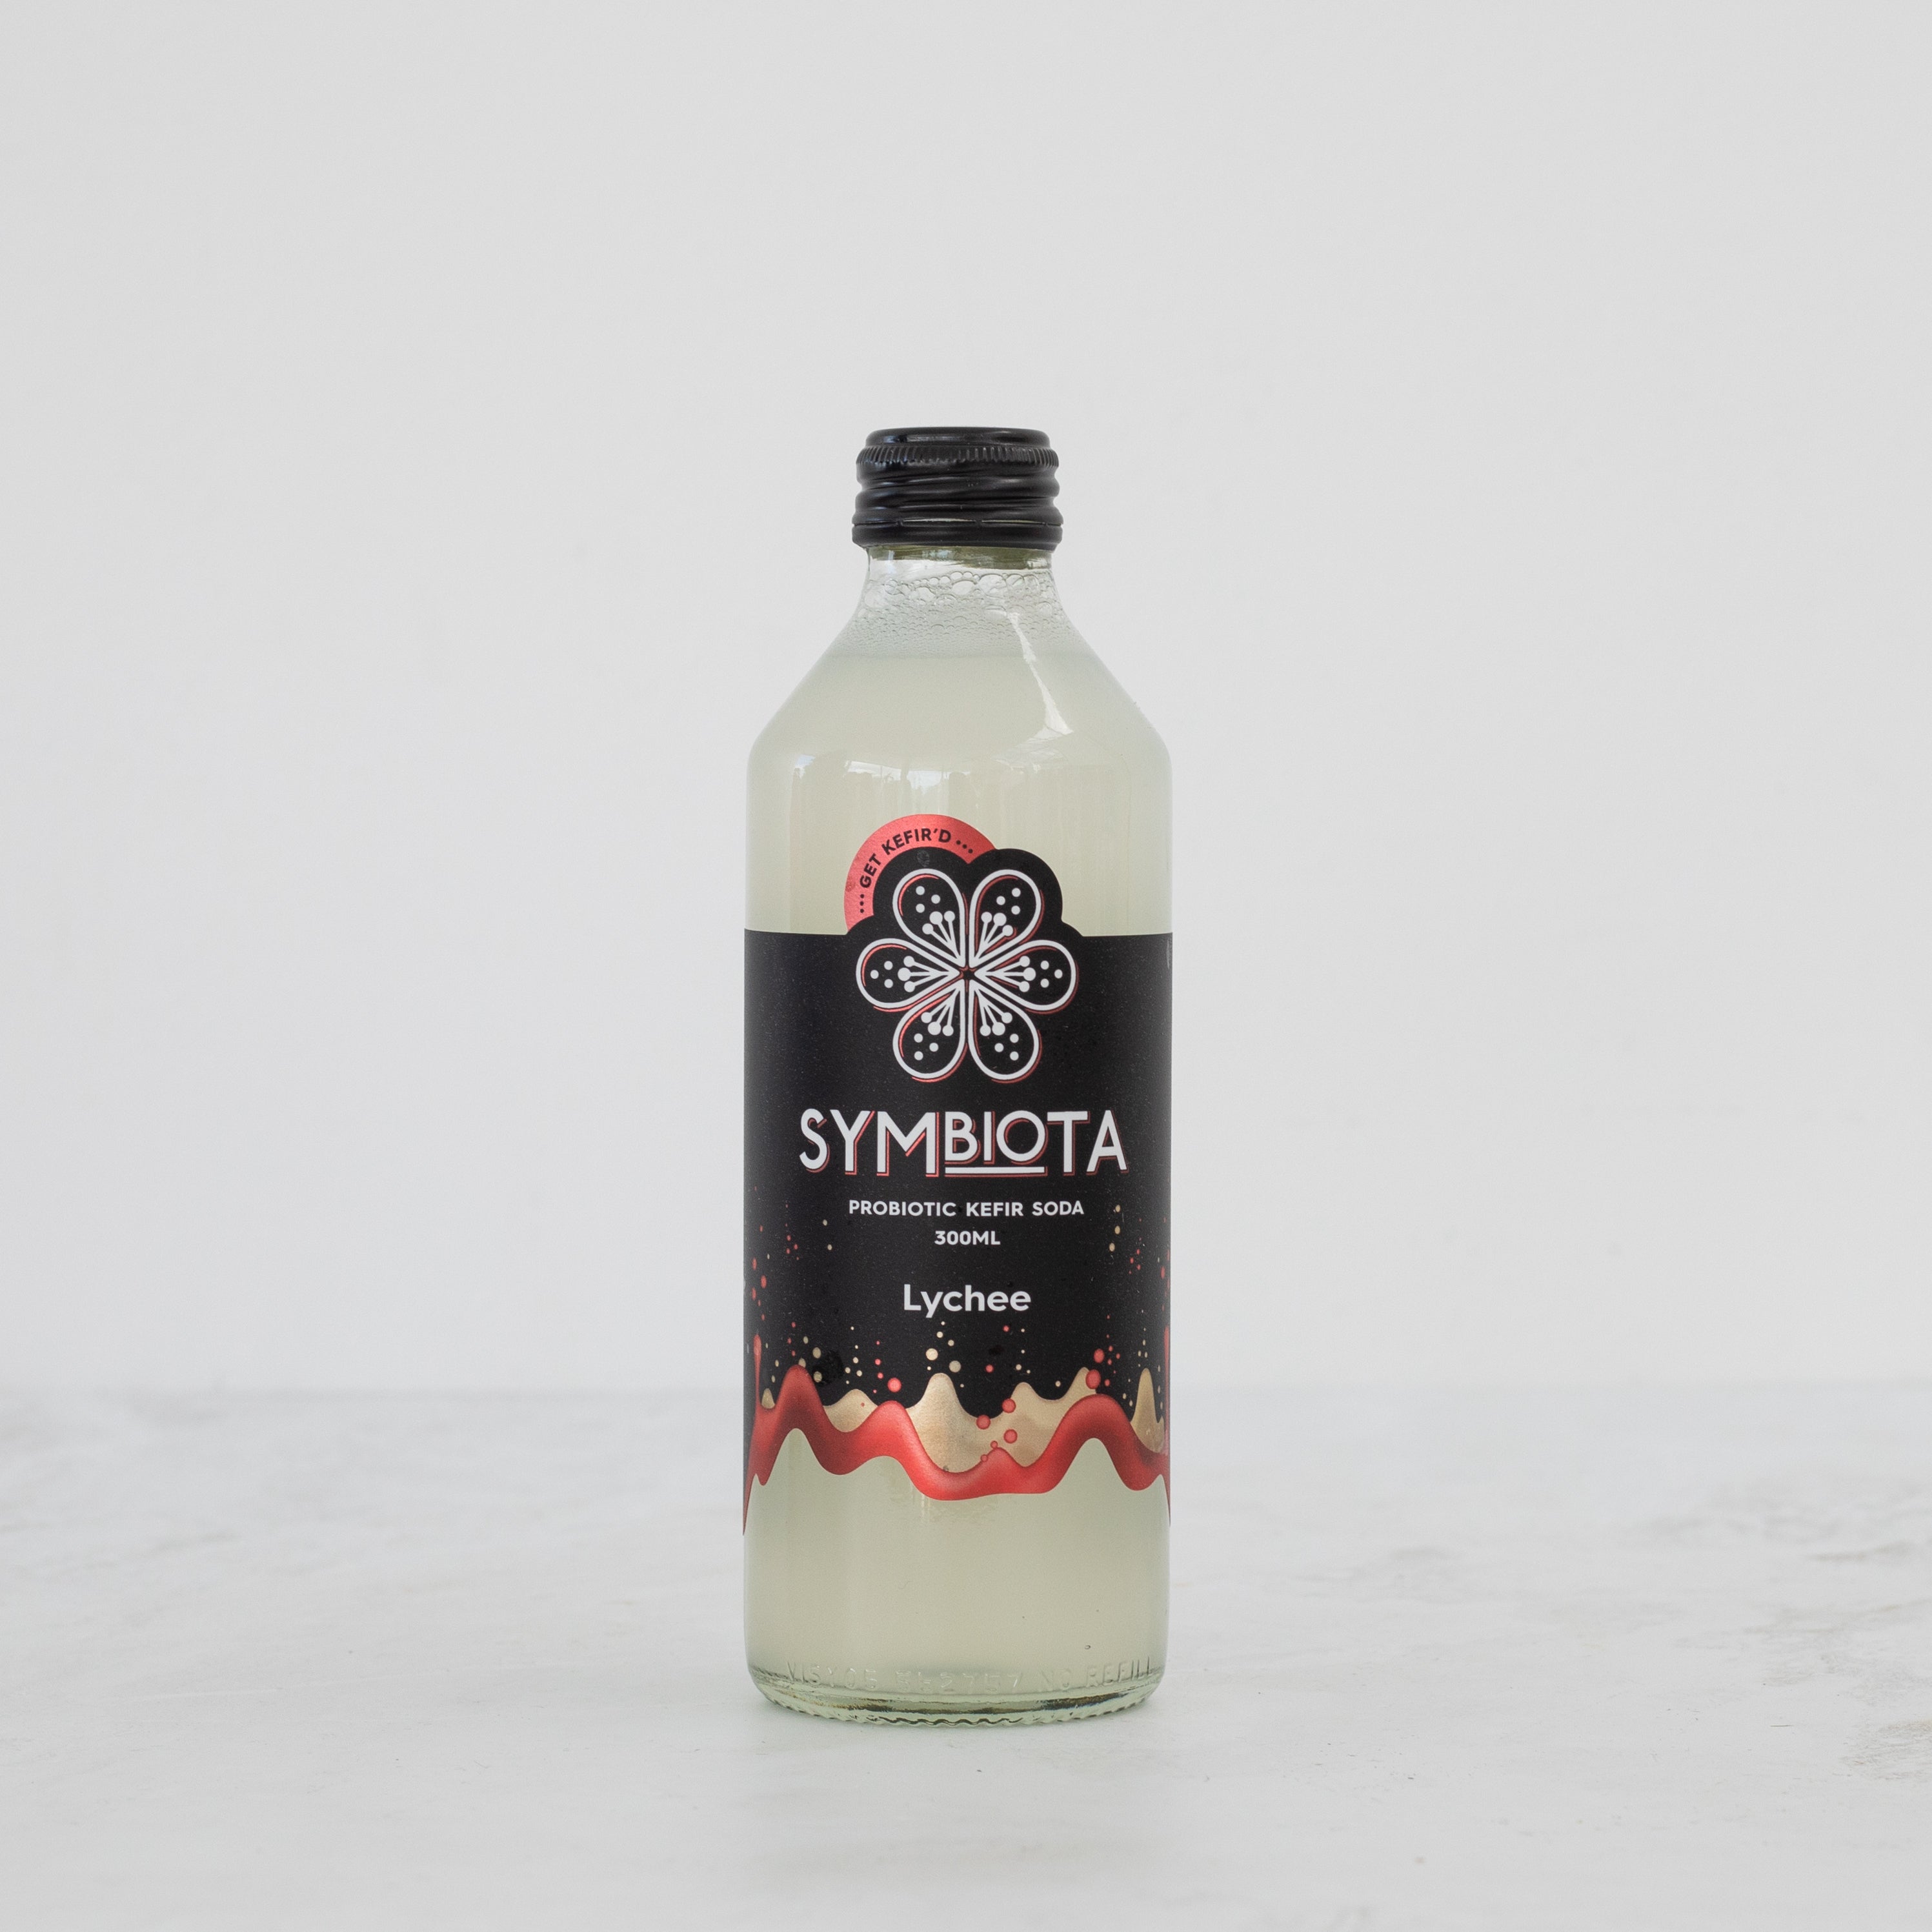 bottle of lychee kefir soda by symbiota